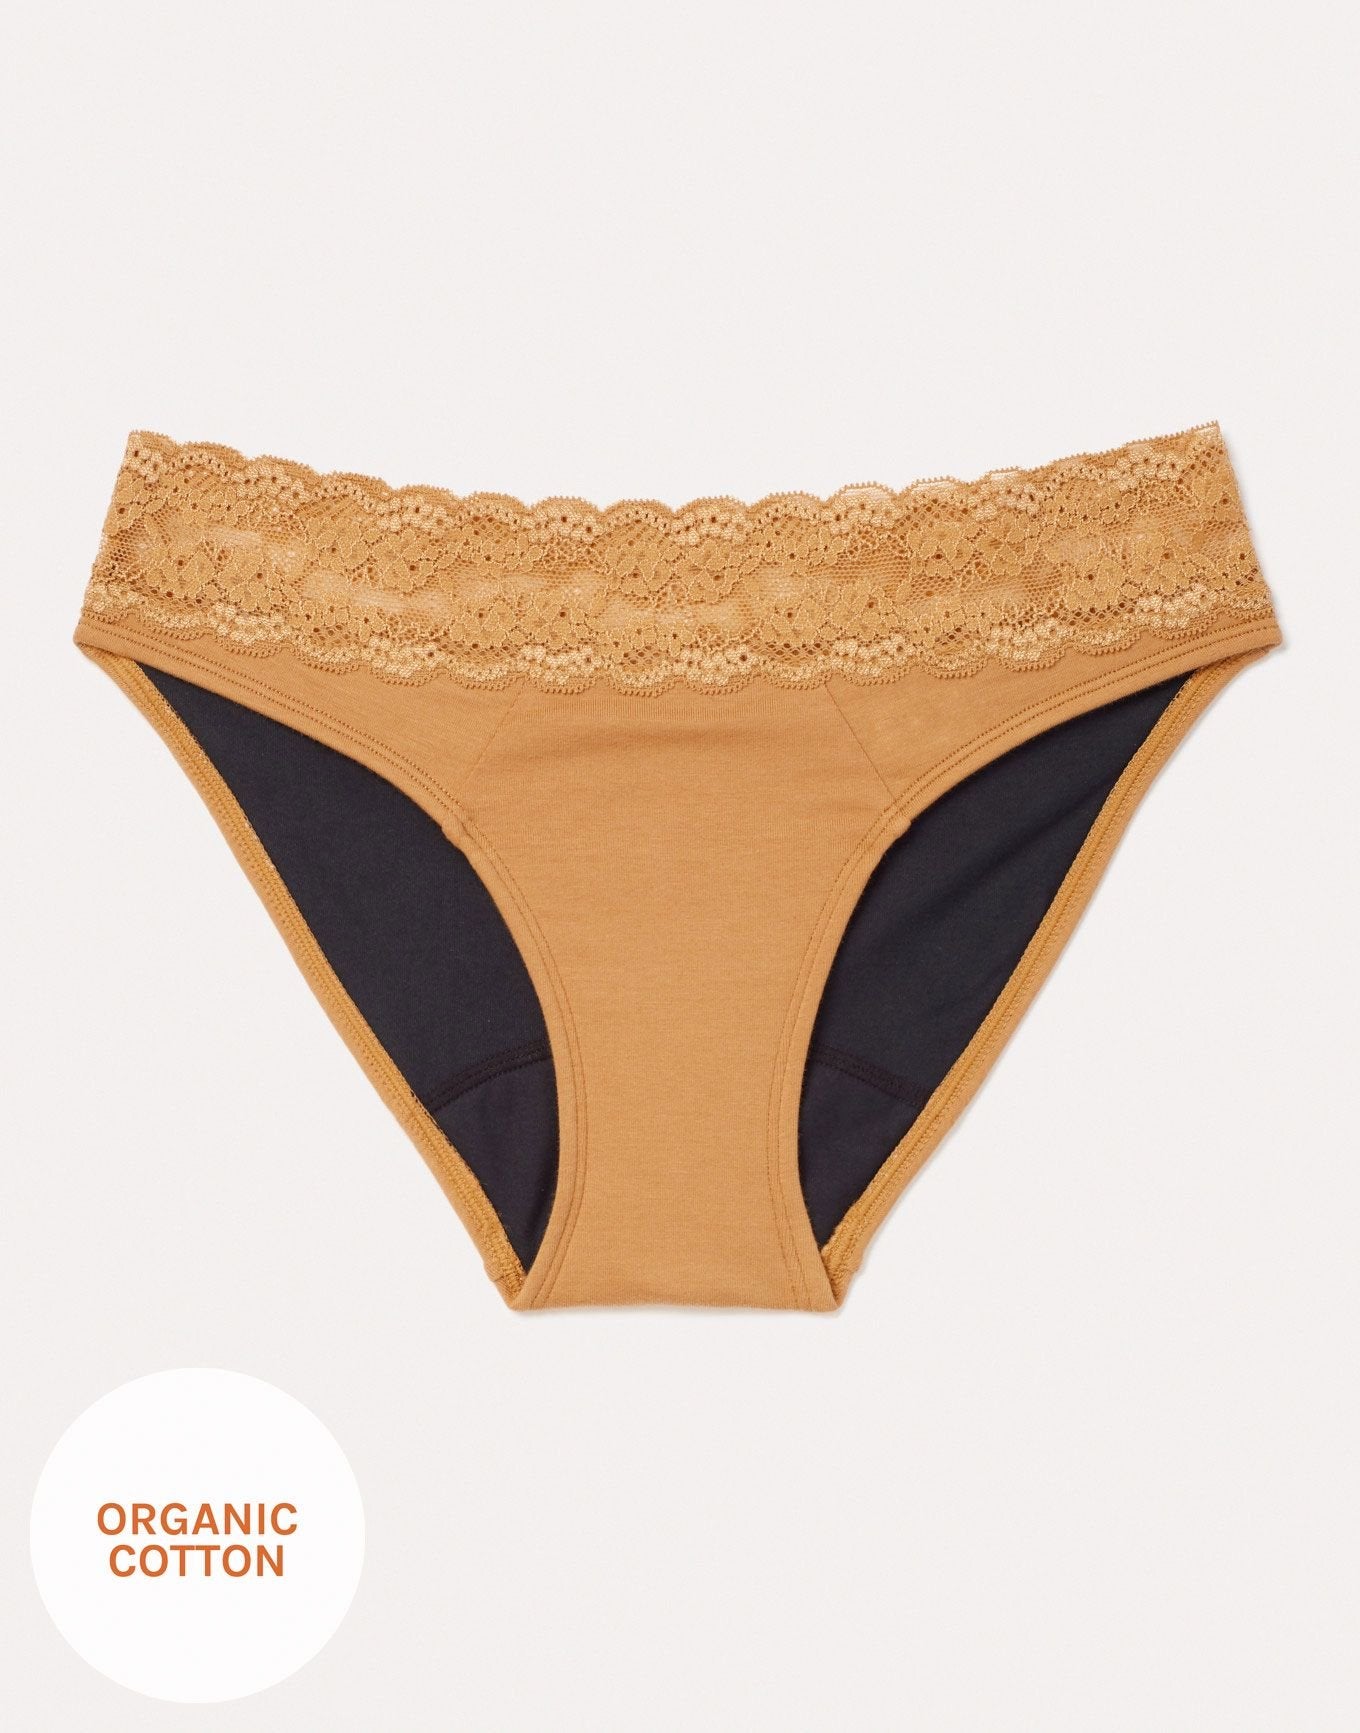 Joyja Alice period-proof panty in color Sand Dry and shape bikini